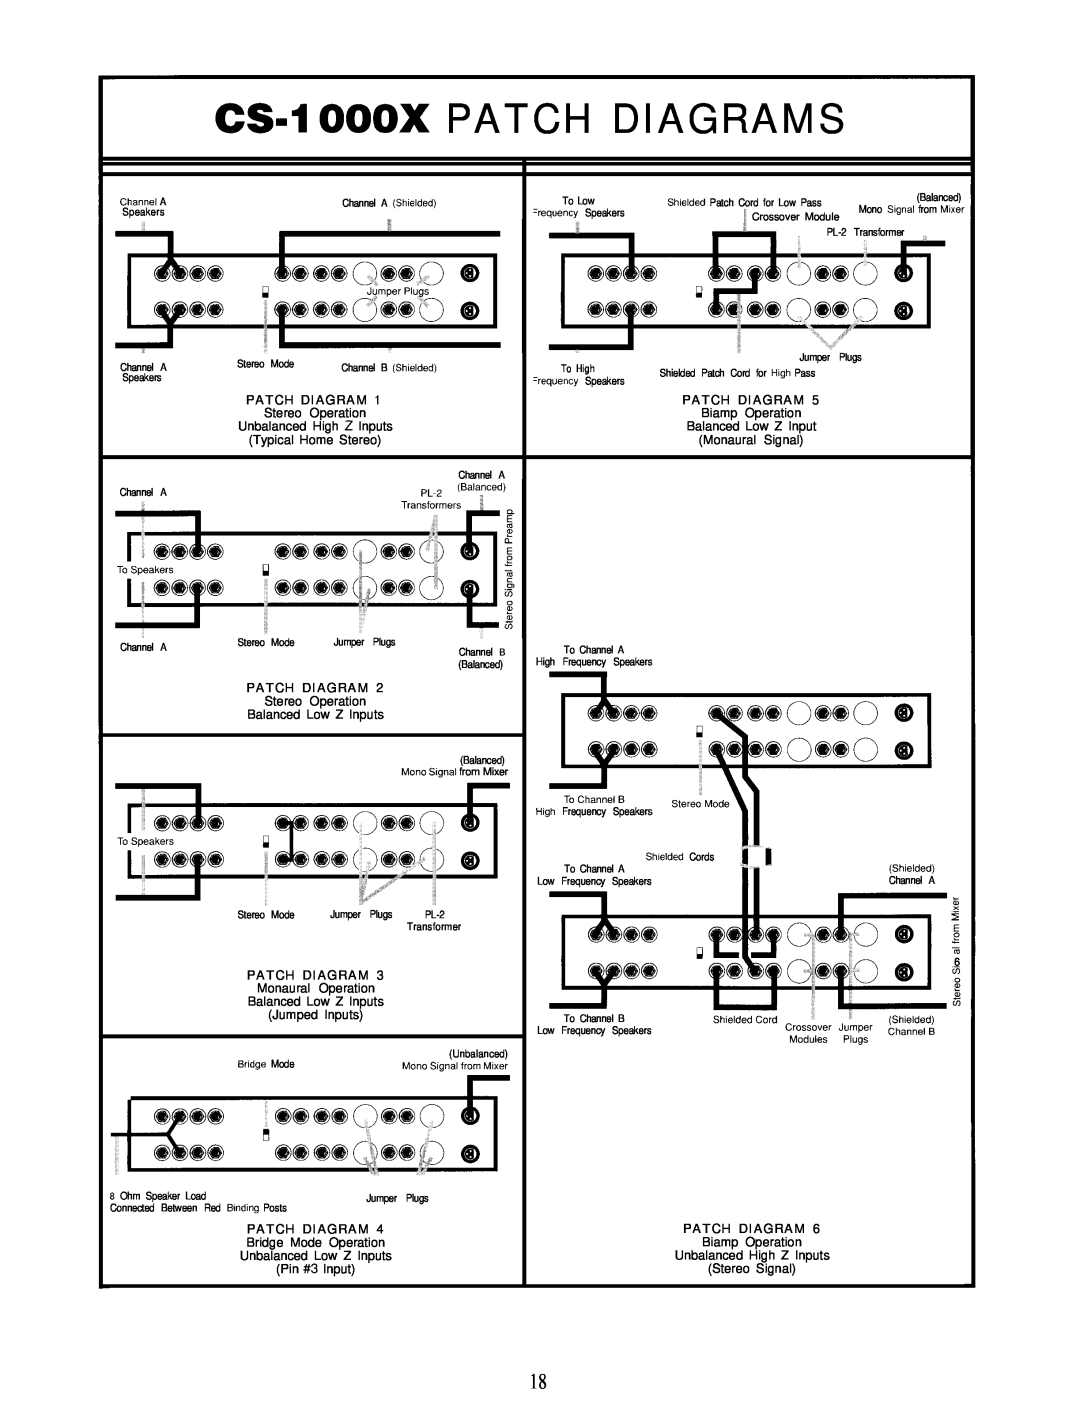 Peavey CS 1000X manual CS-1000X PATCH DIAGRAMS, Patch Diagram 